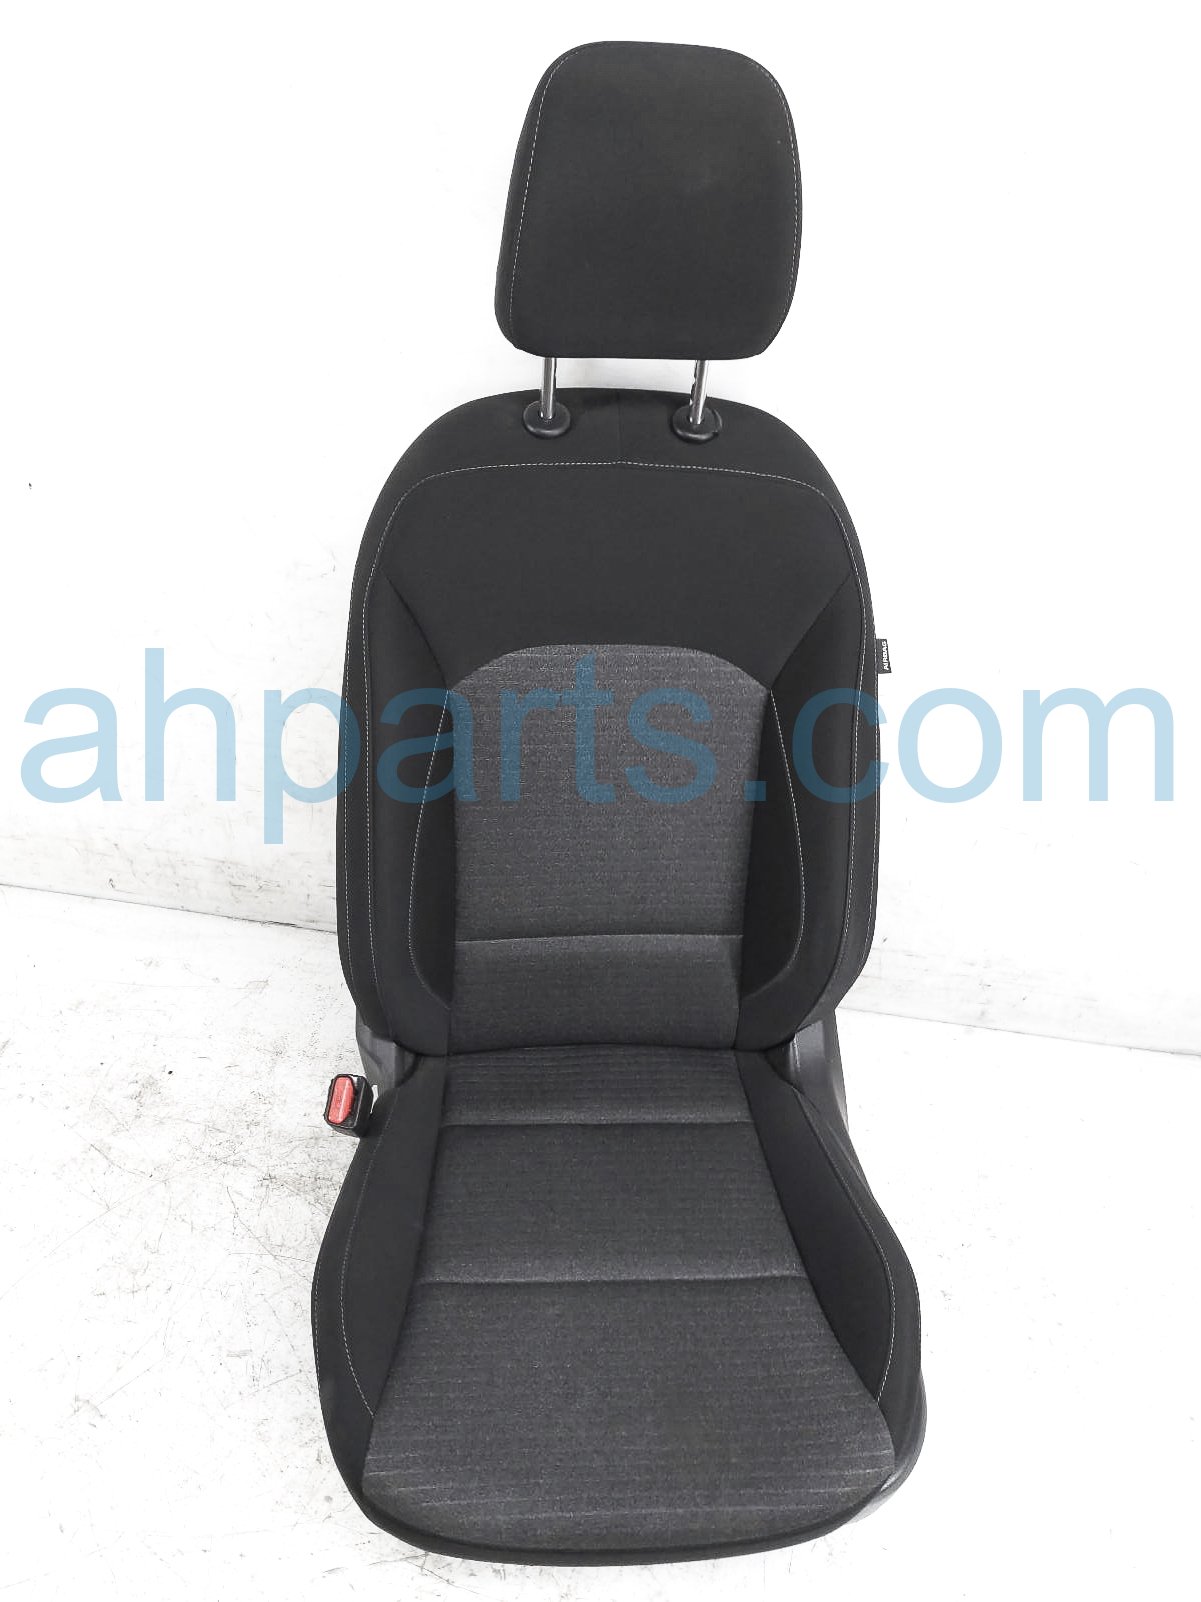 $200 Kia FR/LH SEAT - BLACK - W/ AIRBAG